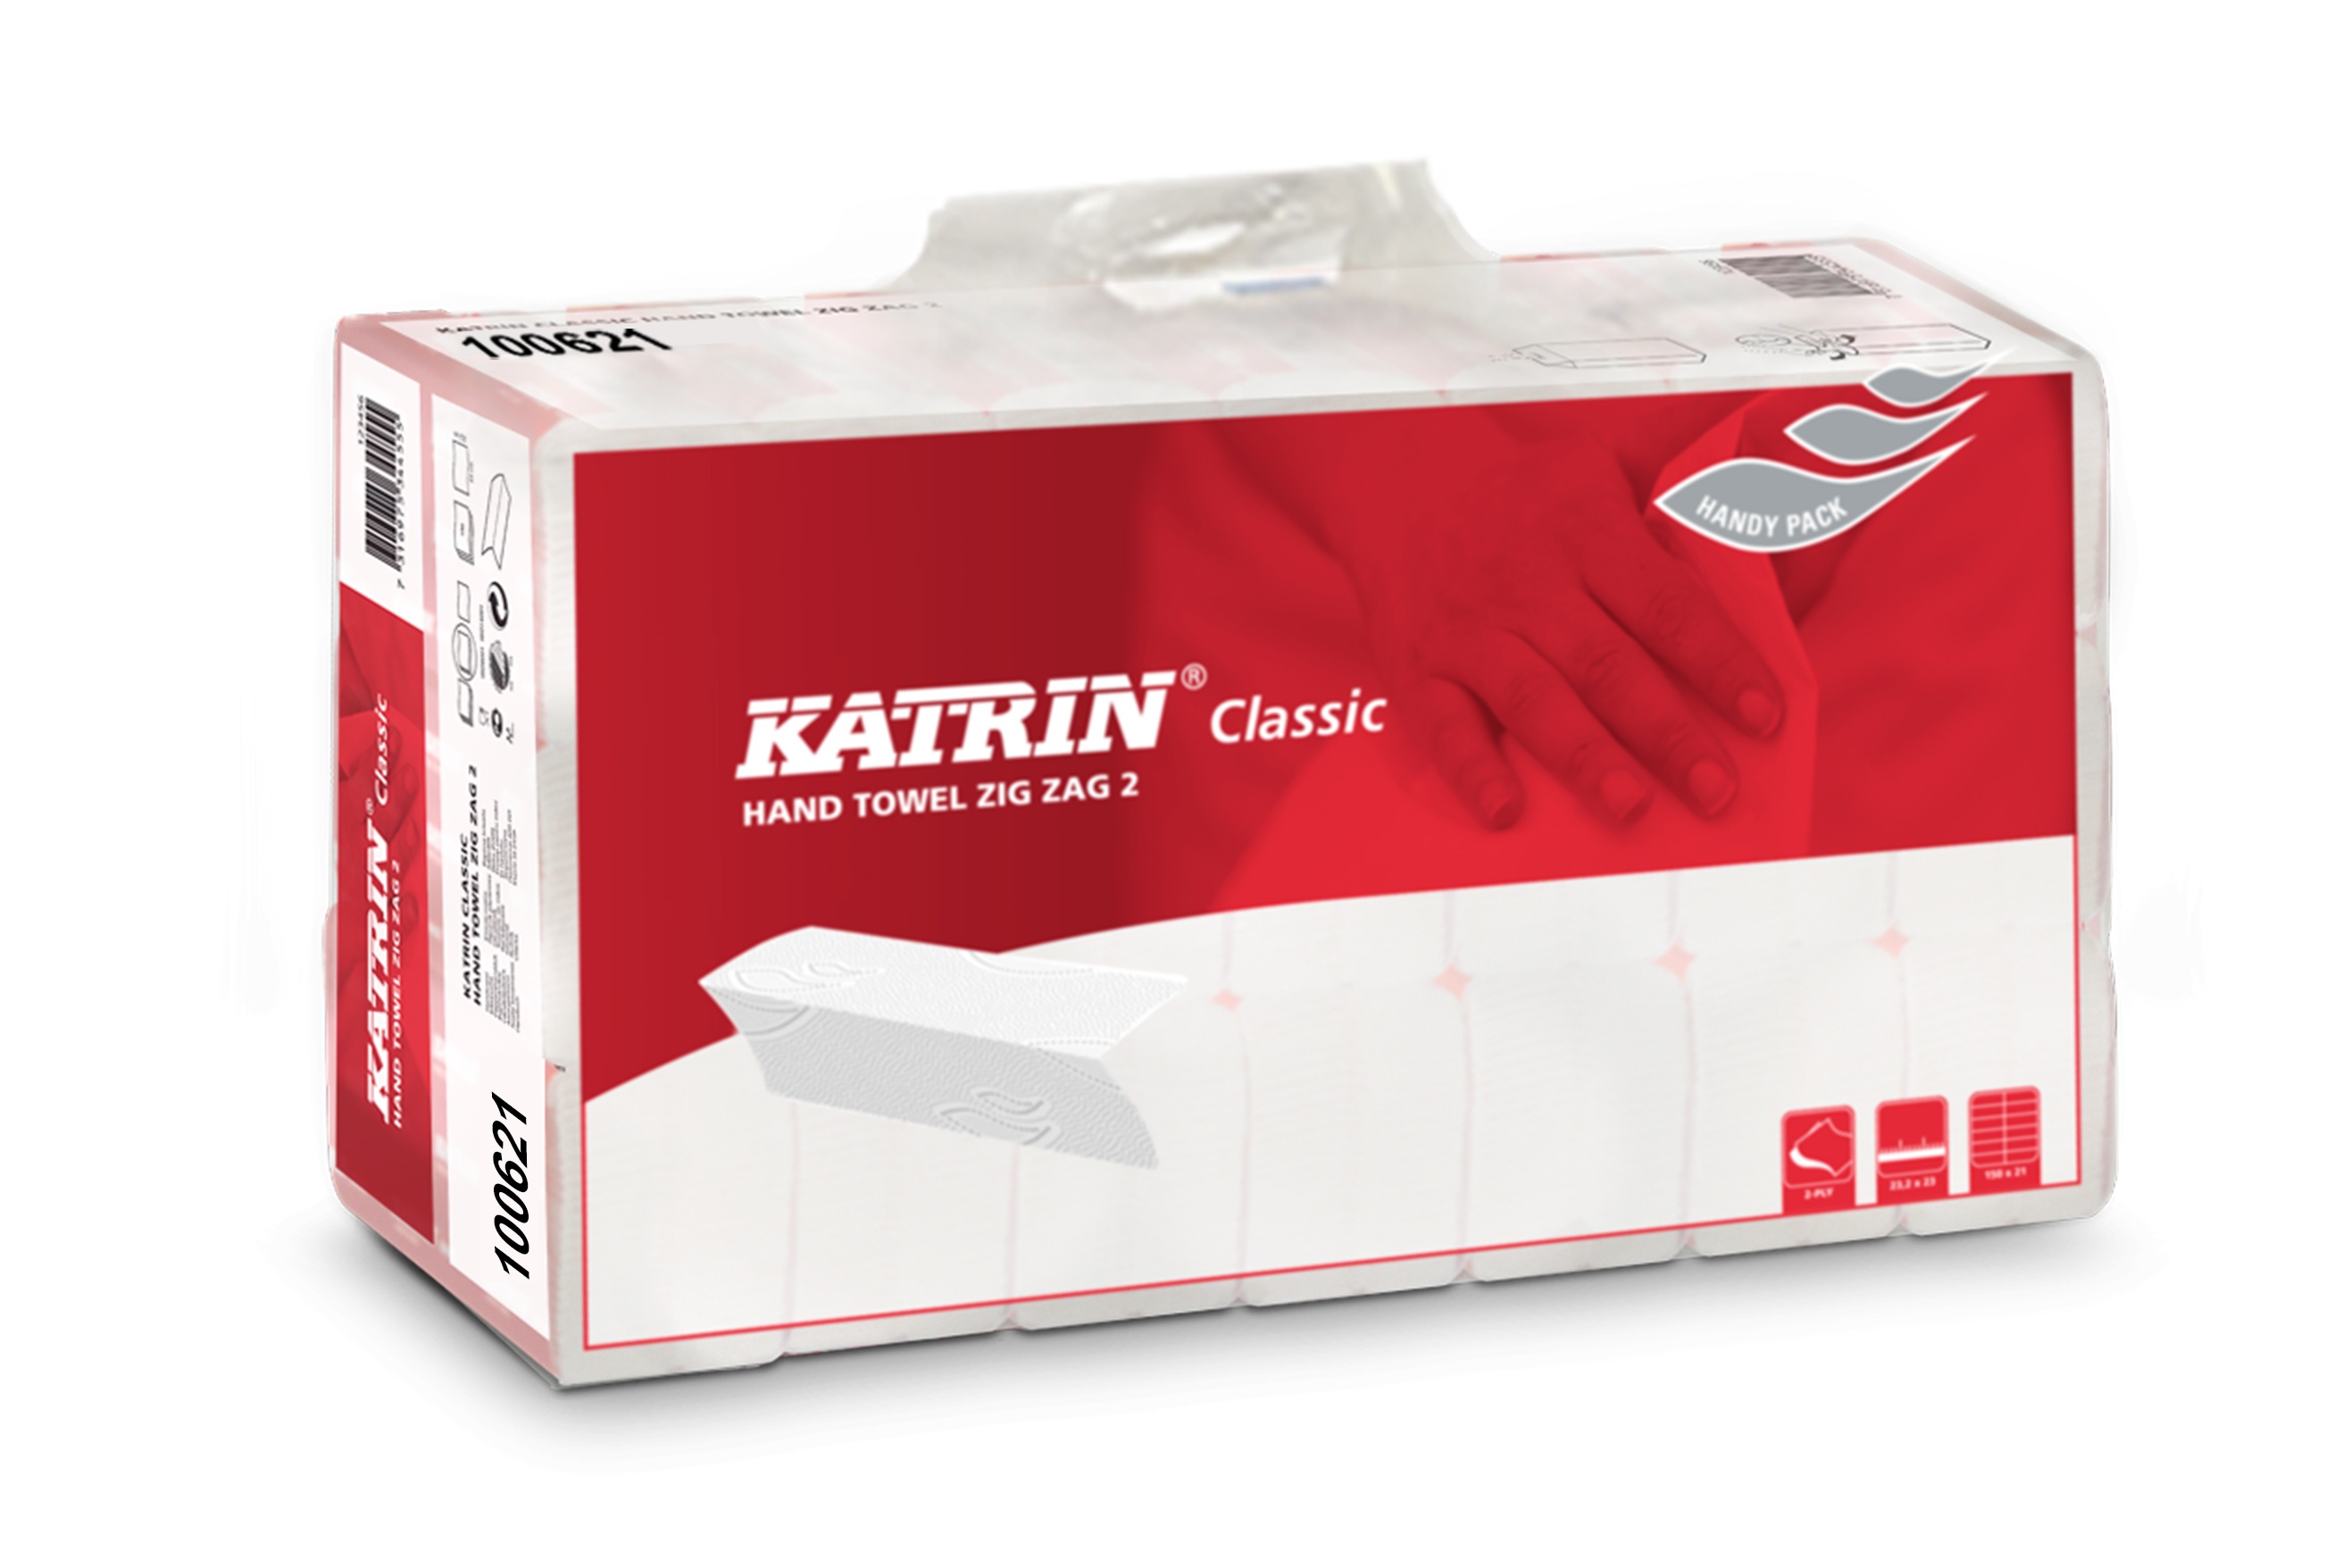 Katrin Classic ZZ 2 21x150, Handy Pack 100621